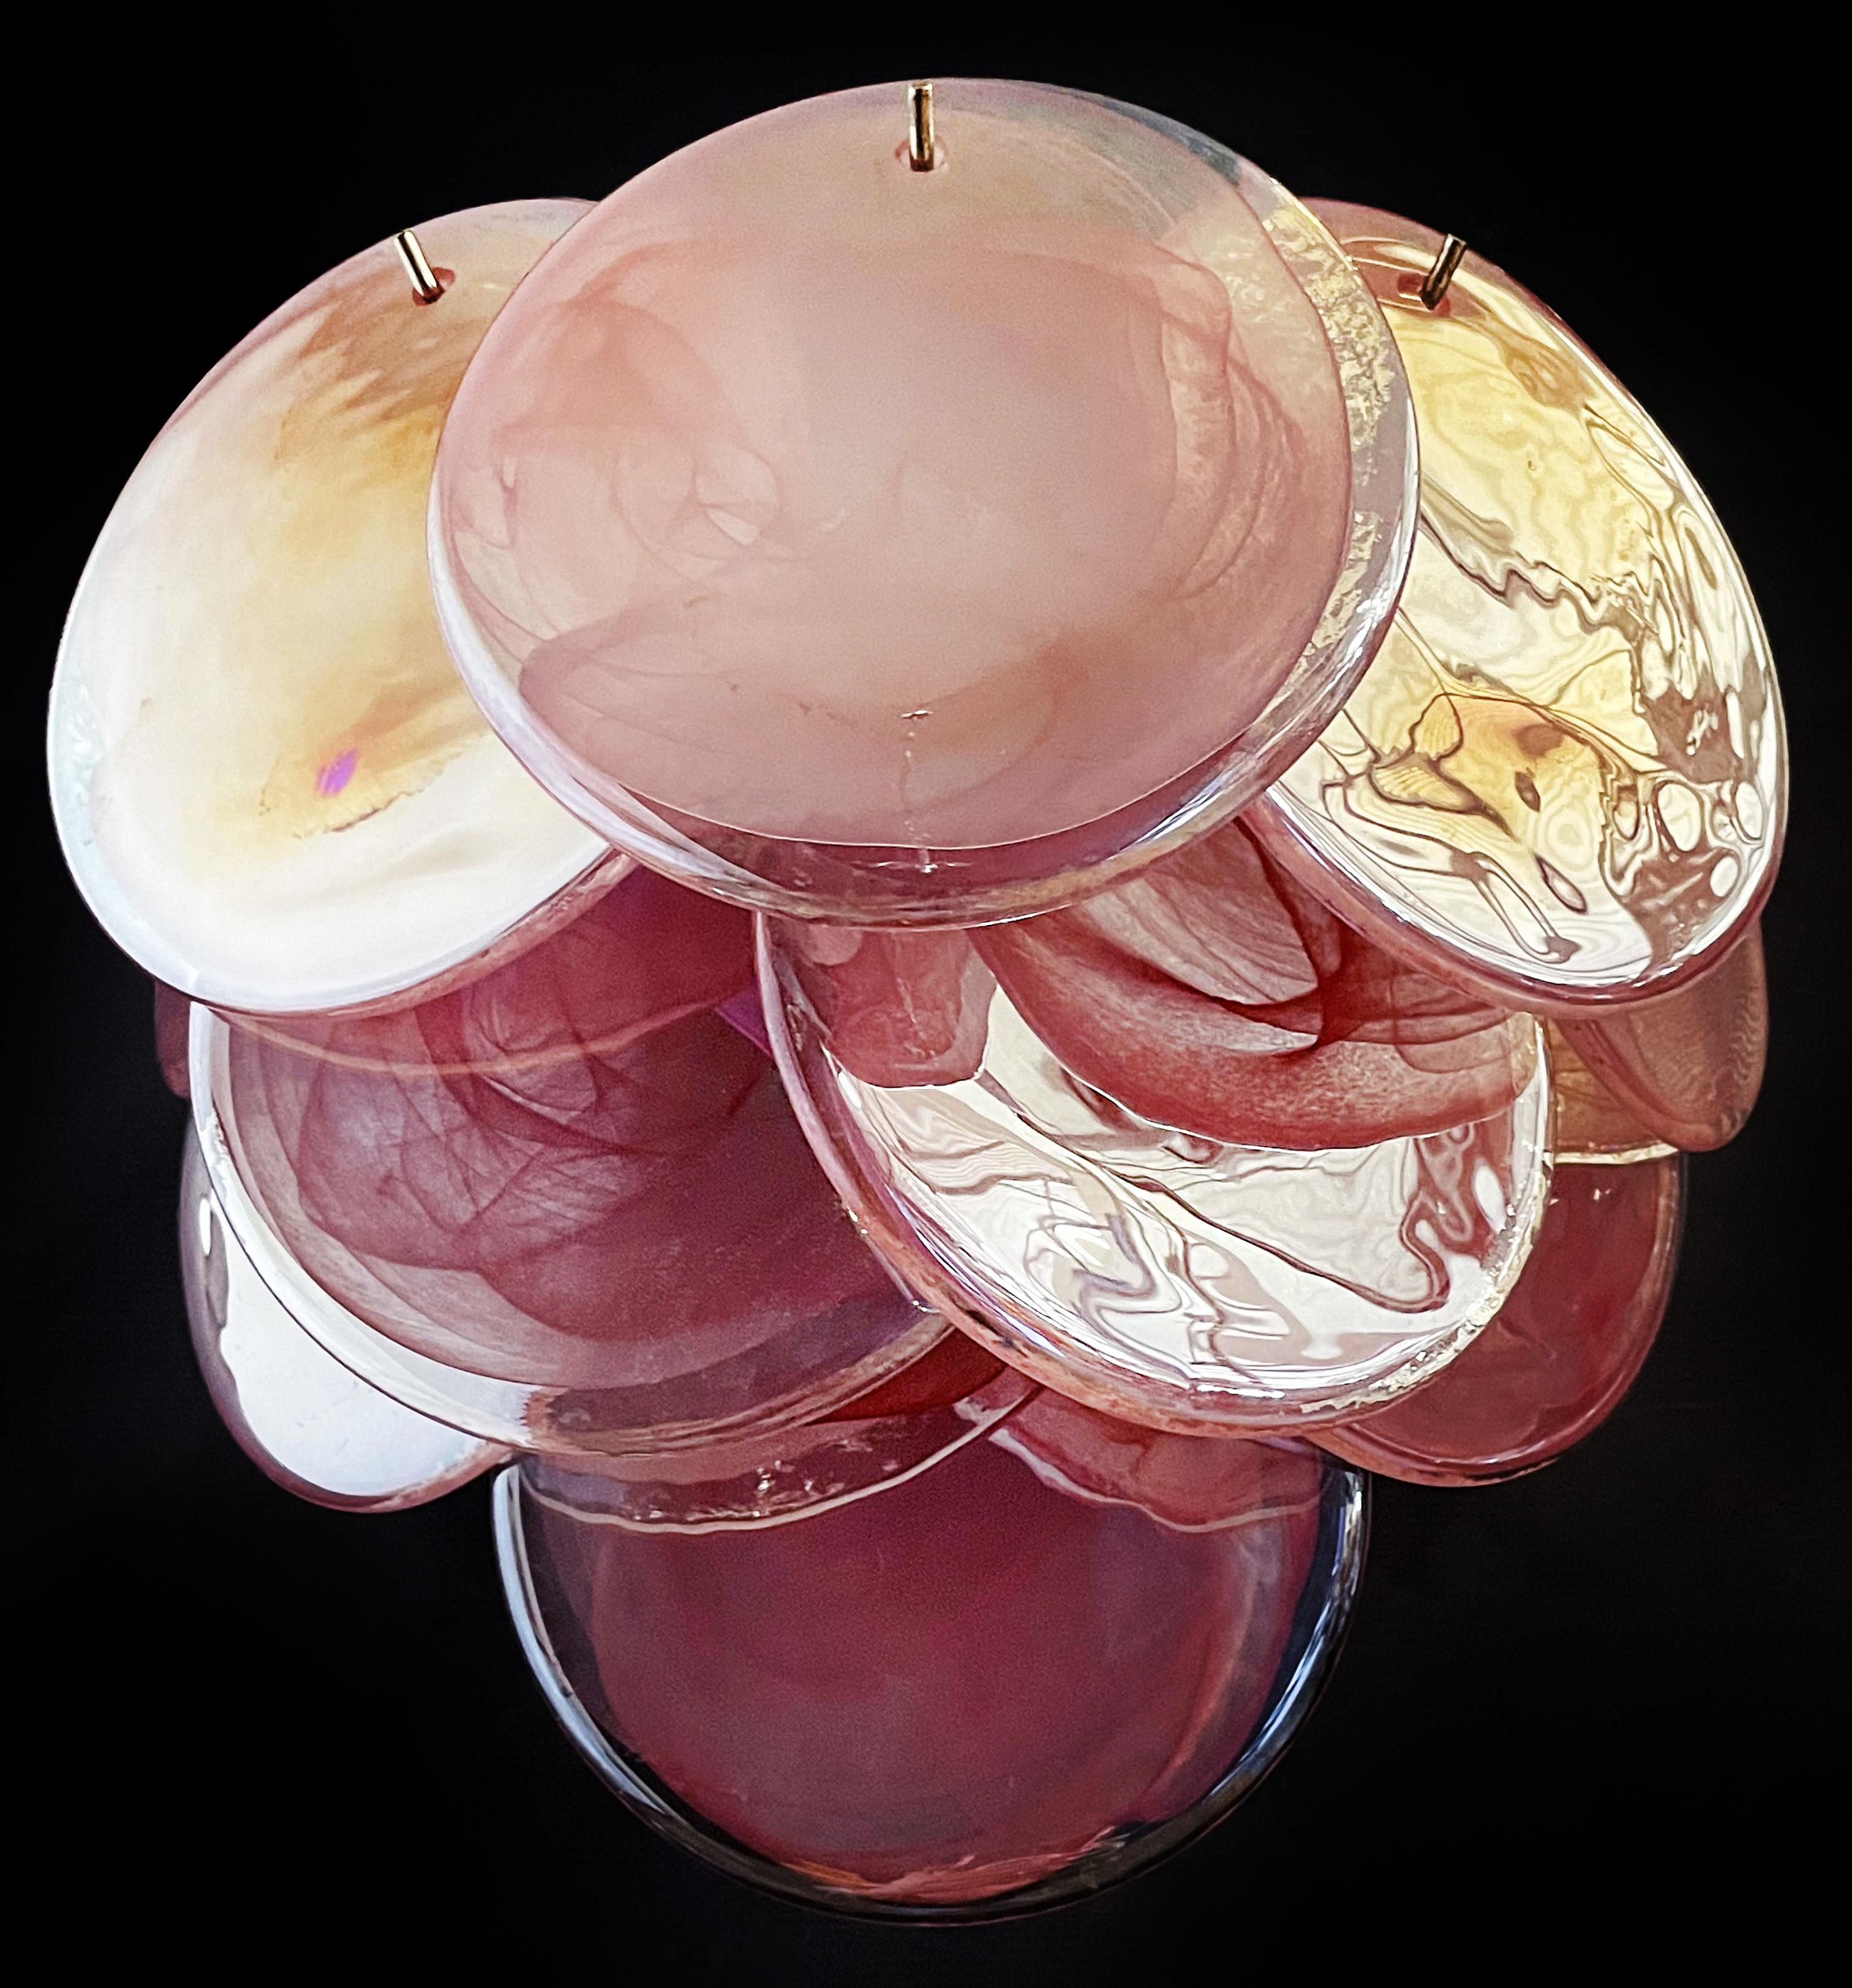 Beautiful Pair of glass wall sconces - 10 iridescent alabaster pink discs 8